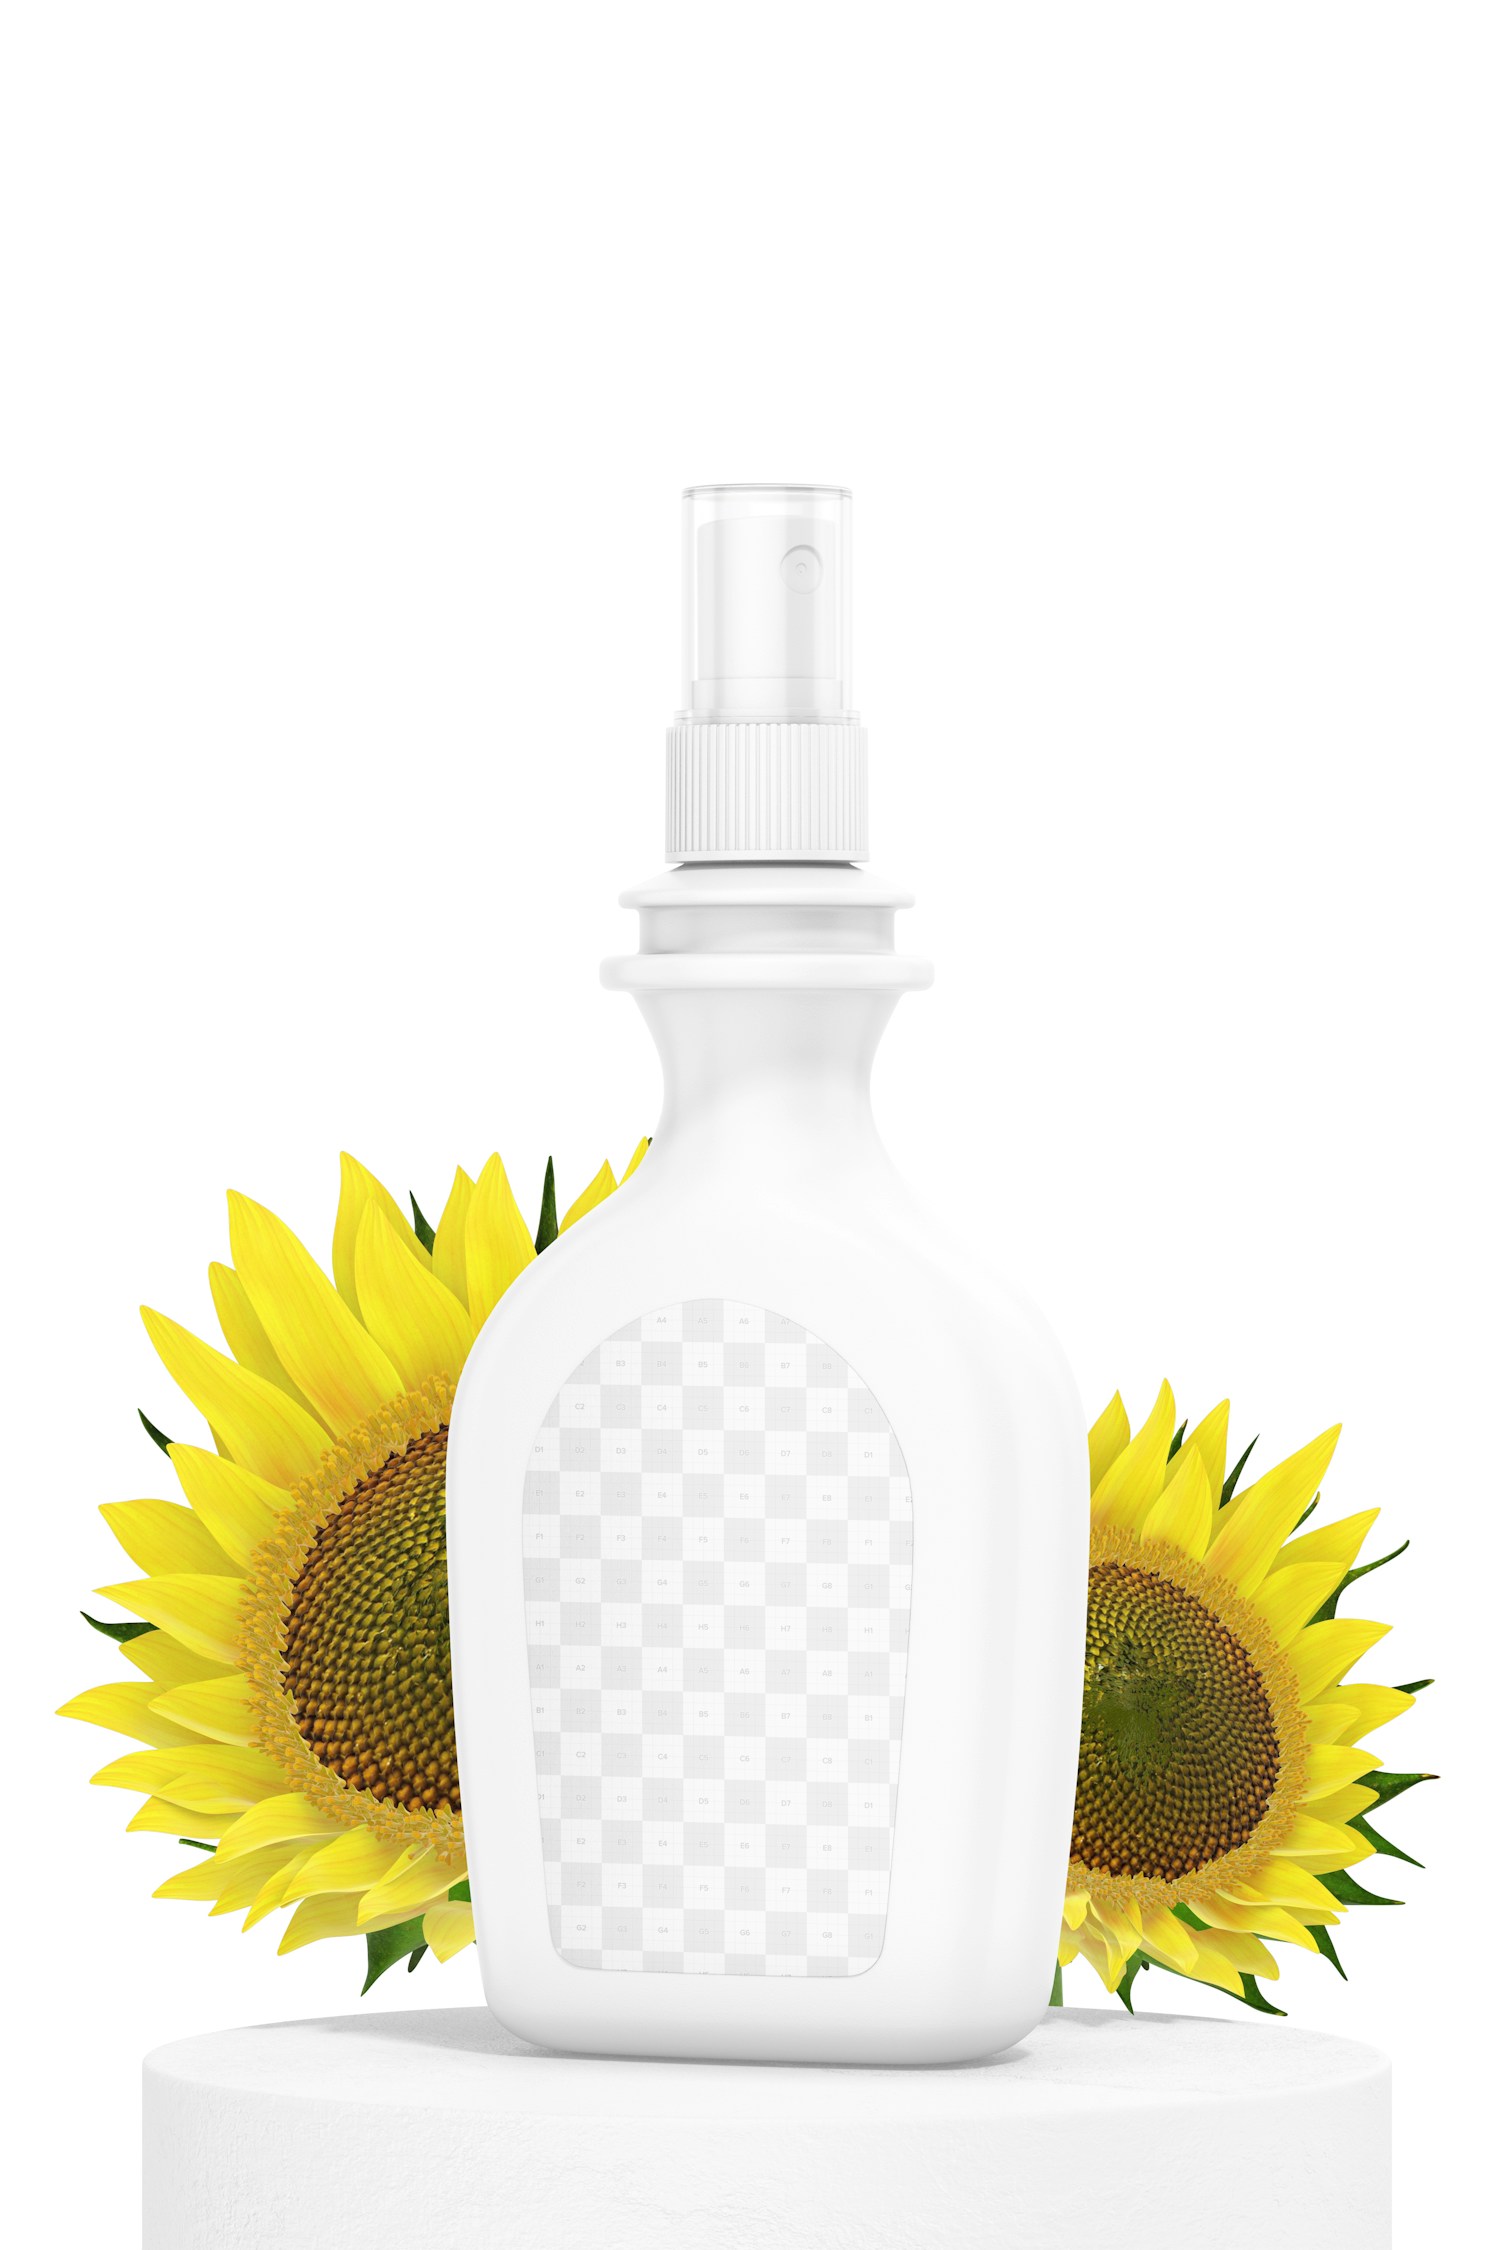 12 oz Vegetable Oil Spray Bottle Mockup, on Surface